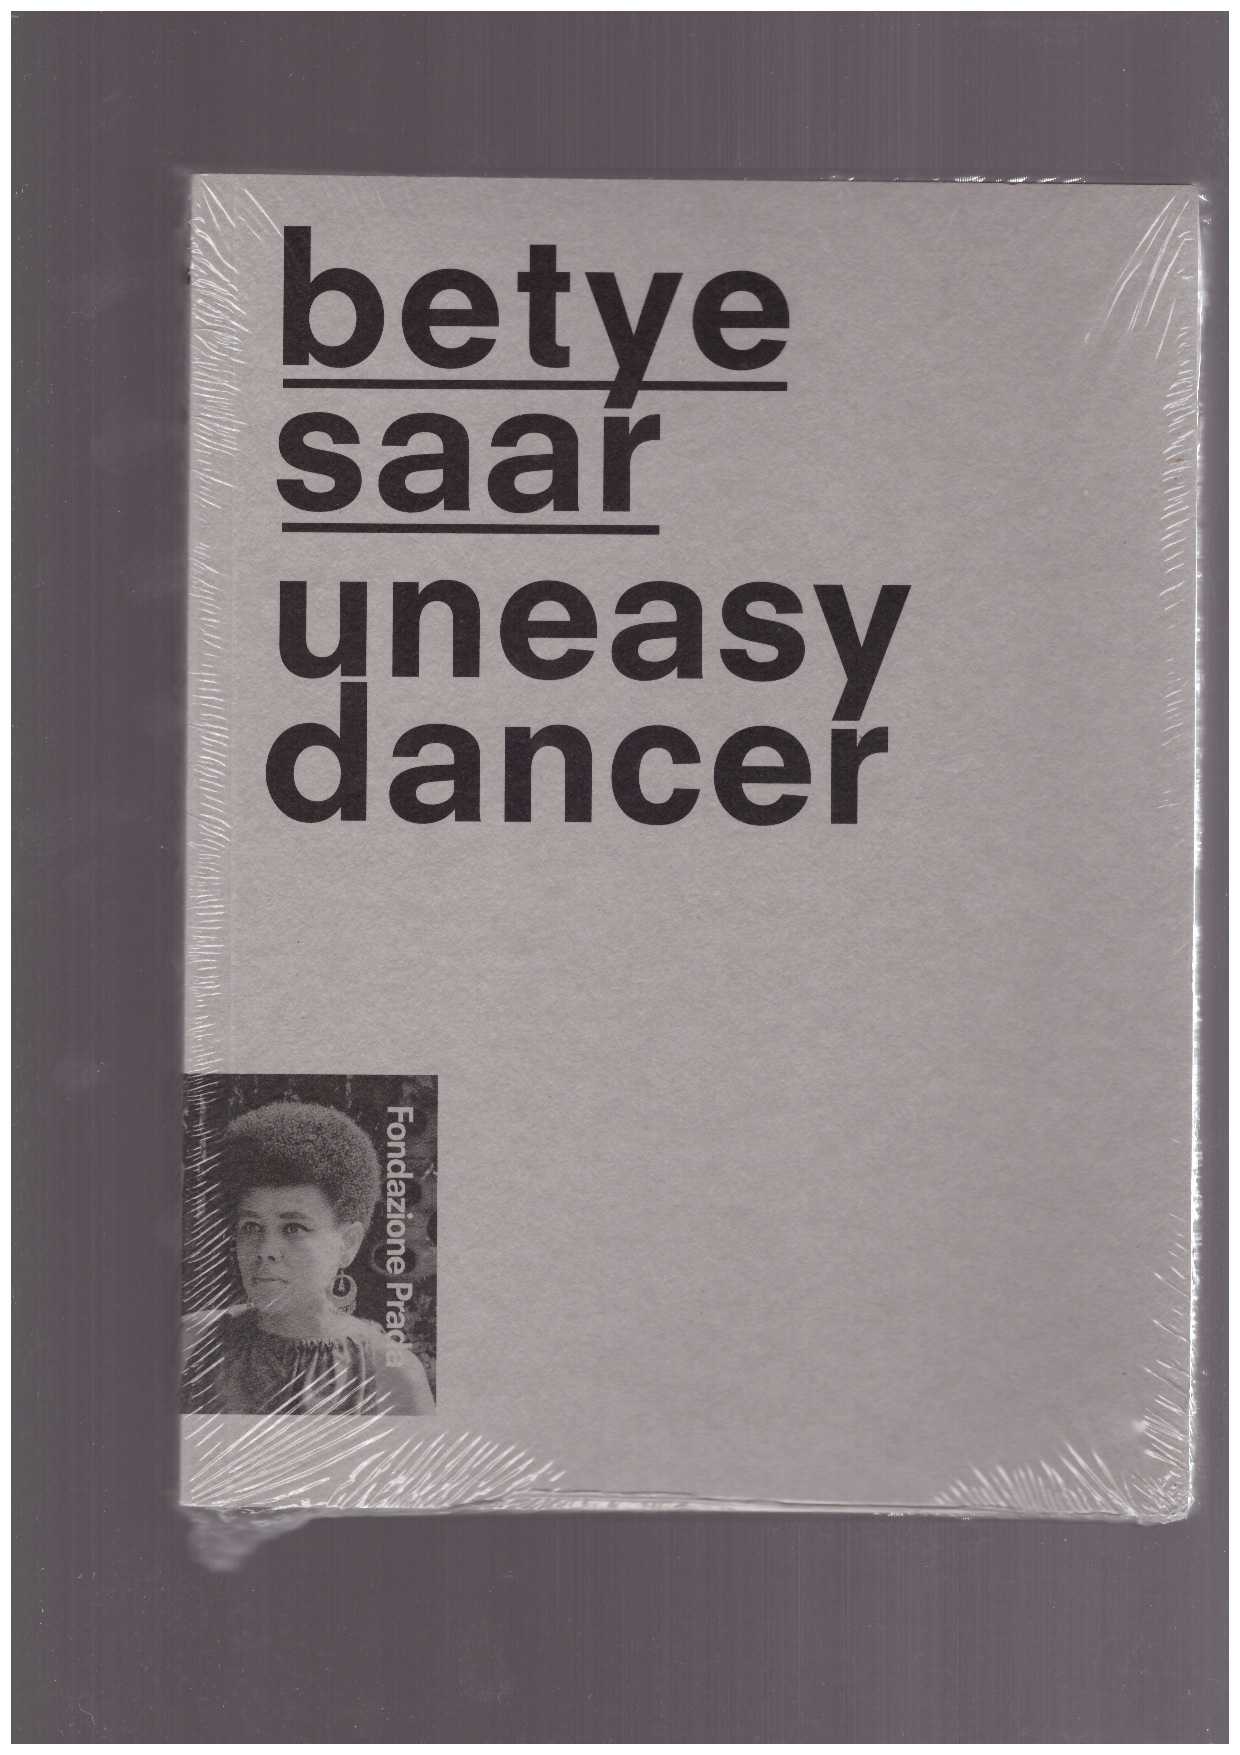 COSTA, Chiara; Mario MAINETTI (eds.) - Betye Saar: Uneasy Dancer